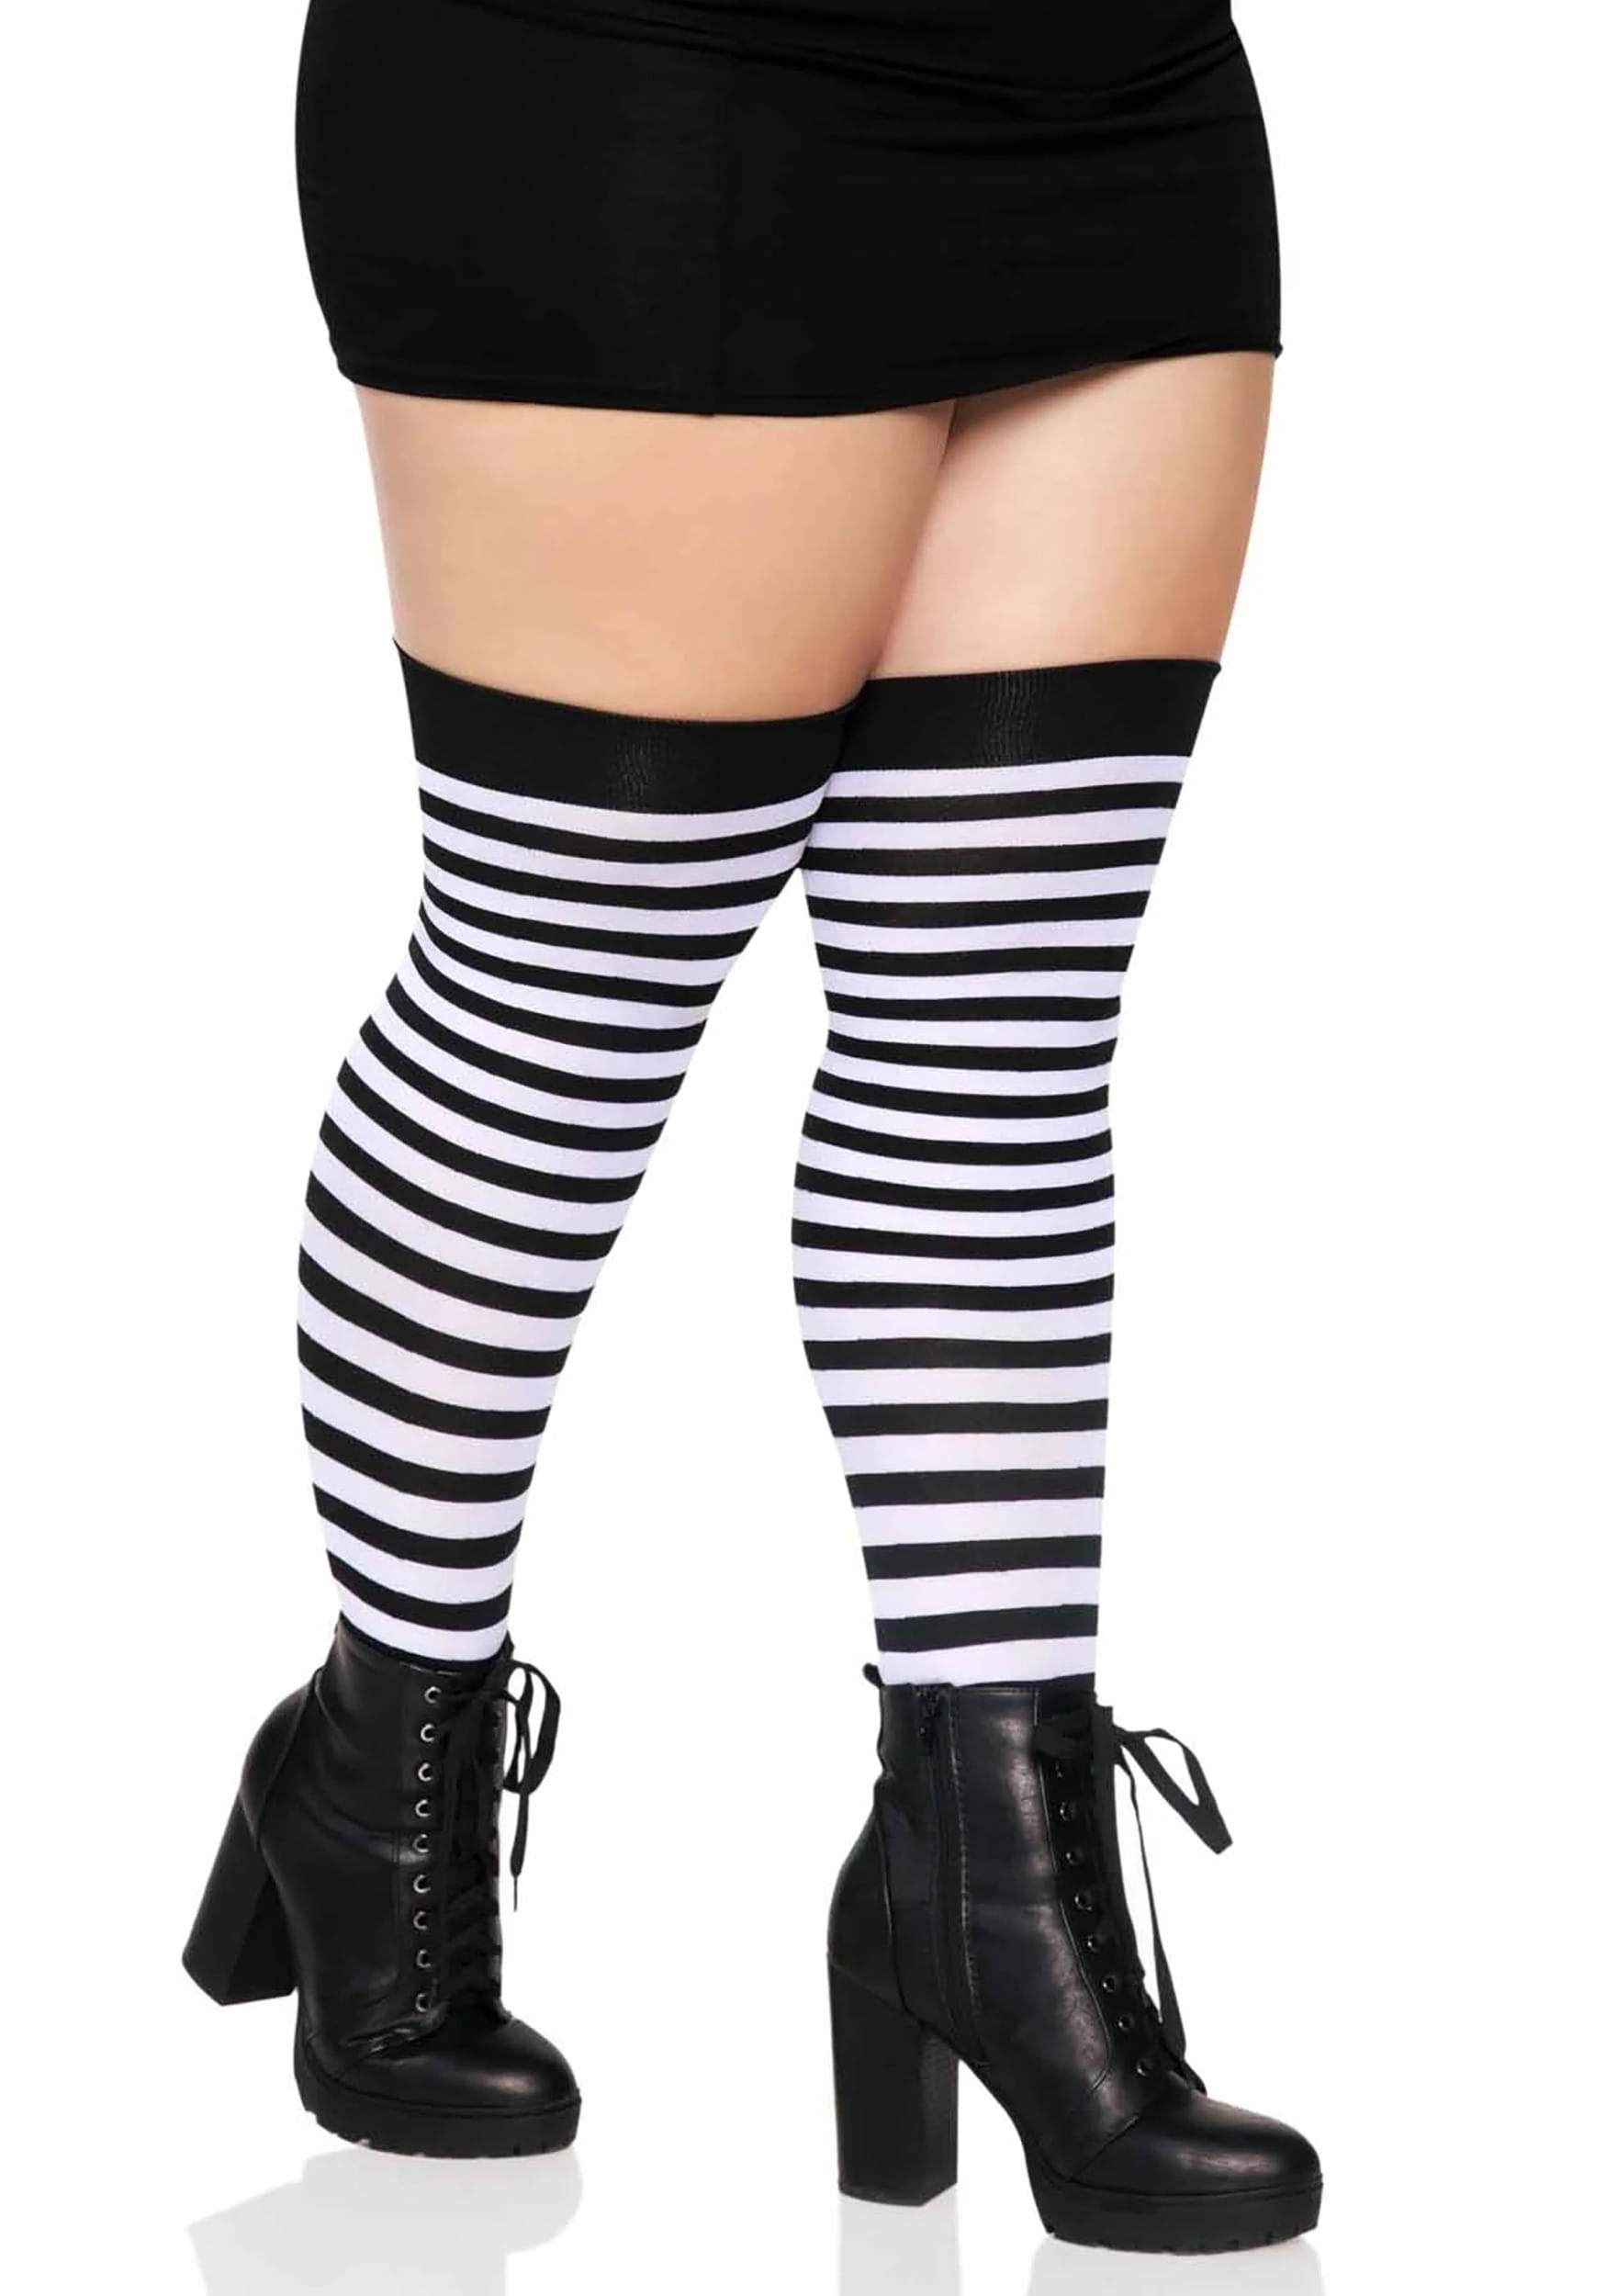 Women's Plus Size Black & White Striped Thigh High Stockings